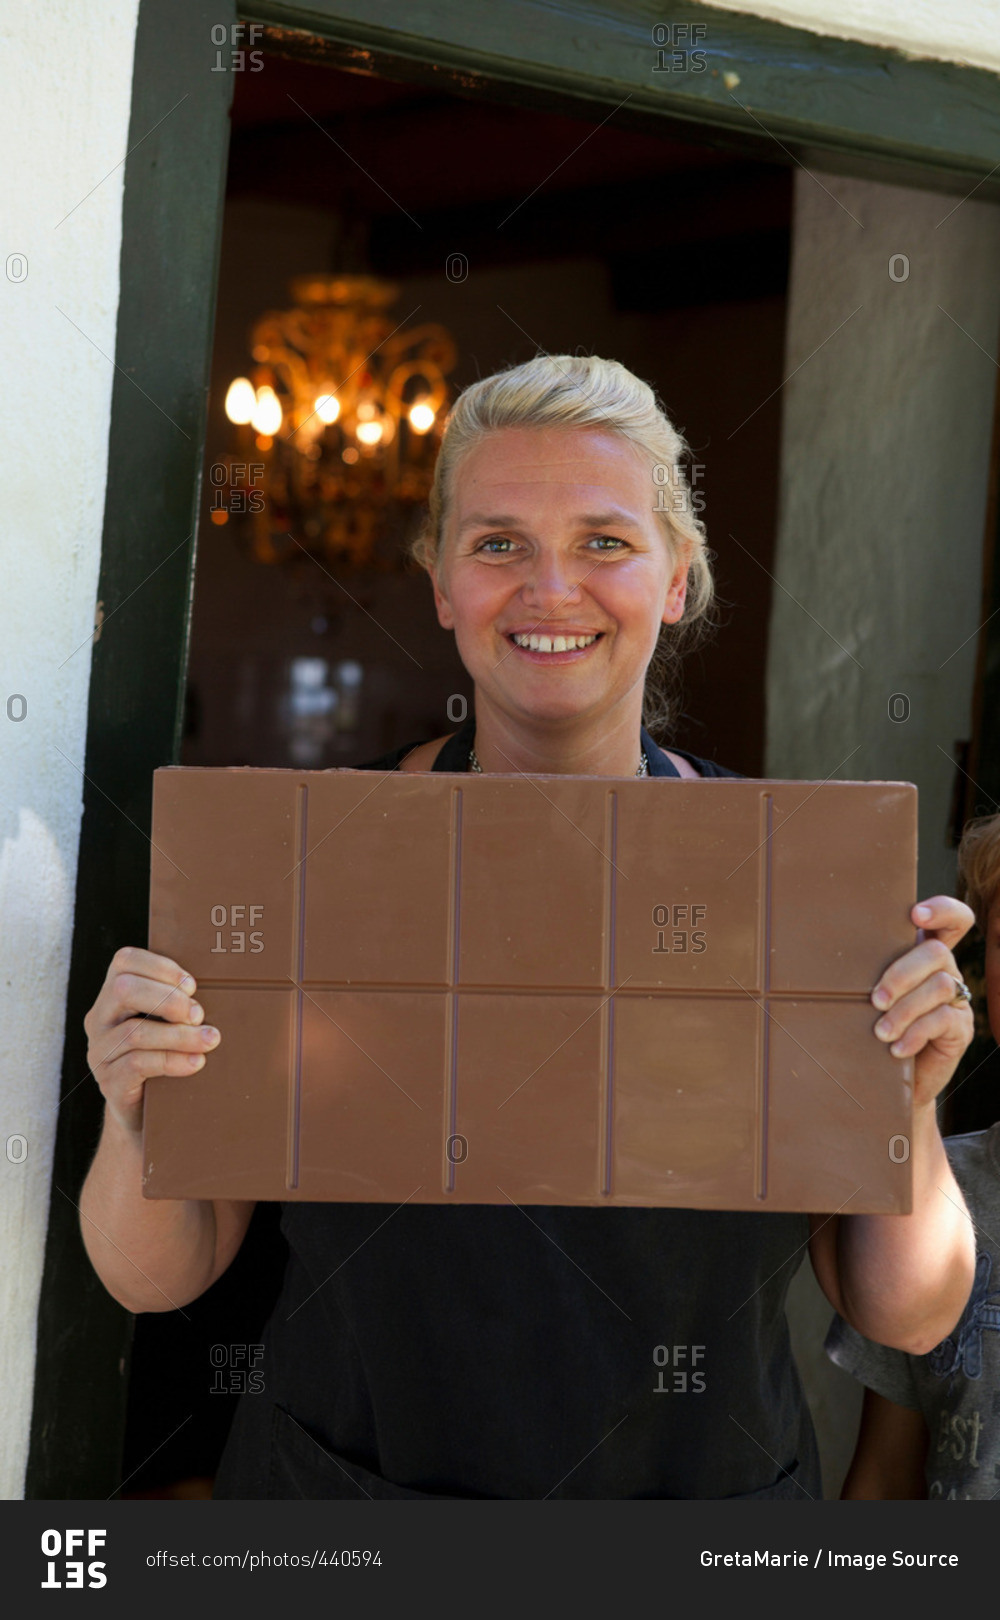 Woman showing chocolate bar